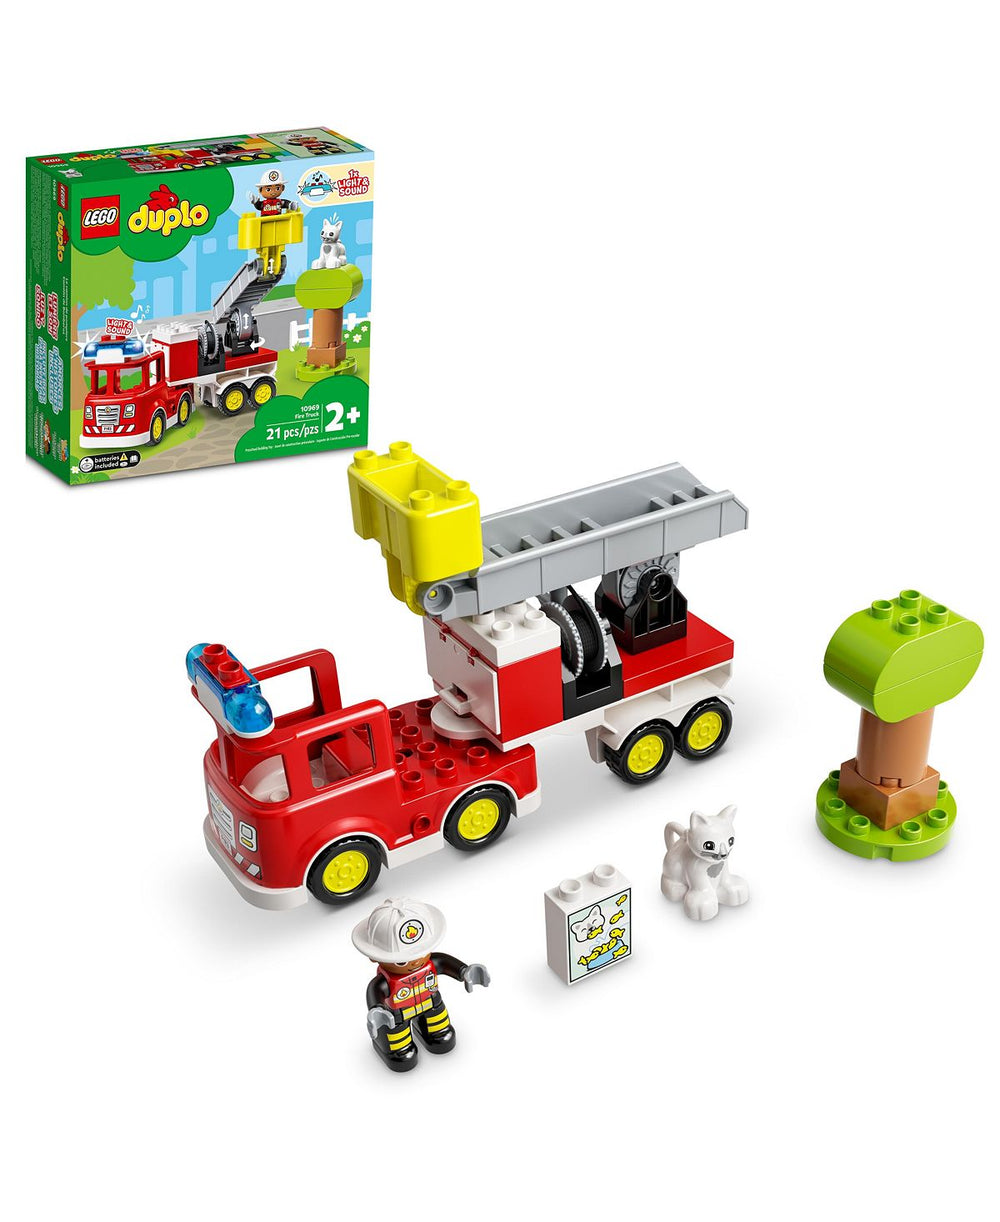 LEGO DUPLO Rescue Fire Truck 10969 Interactive Building Set - 21 Pieces